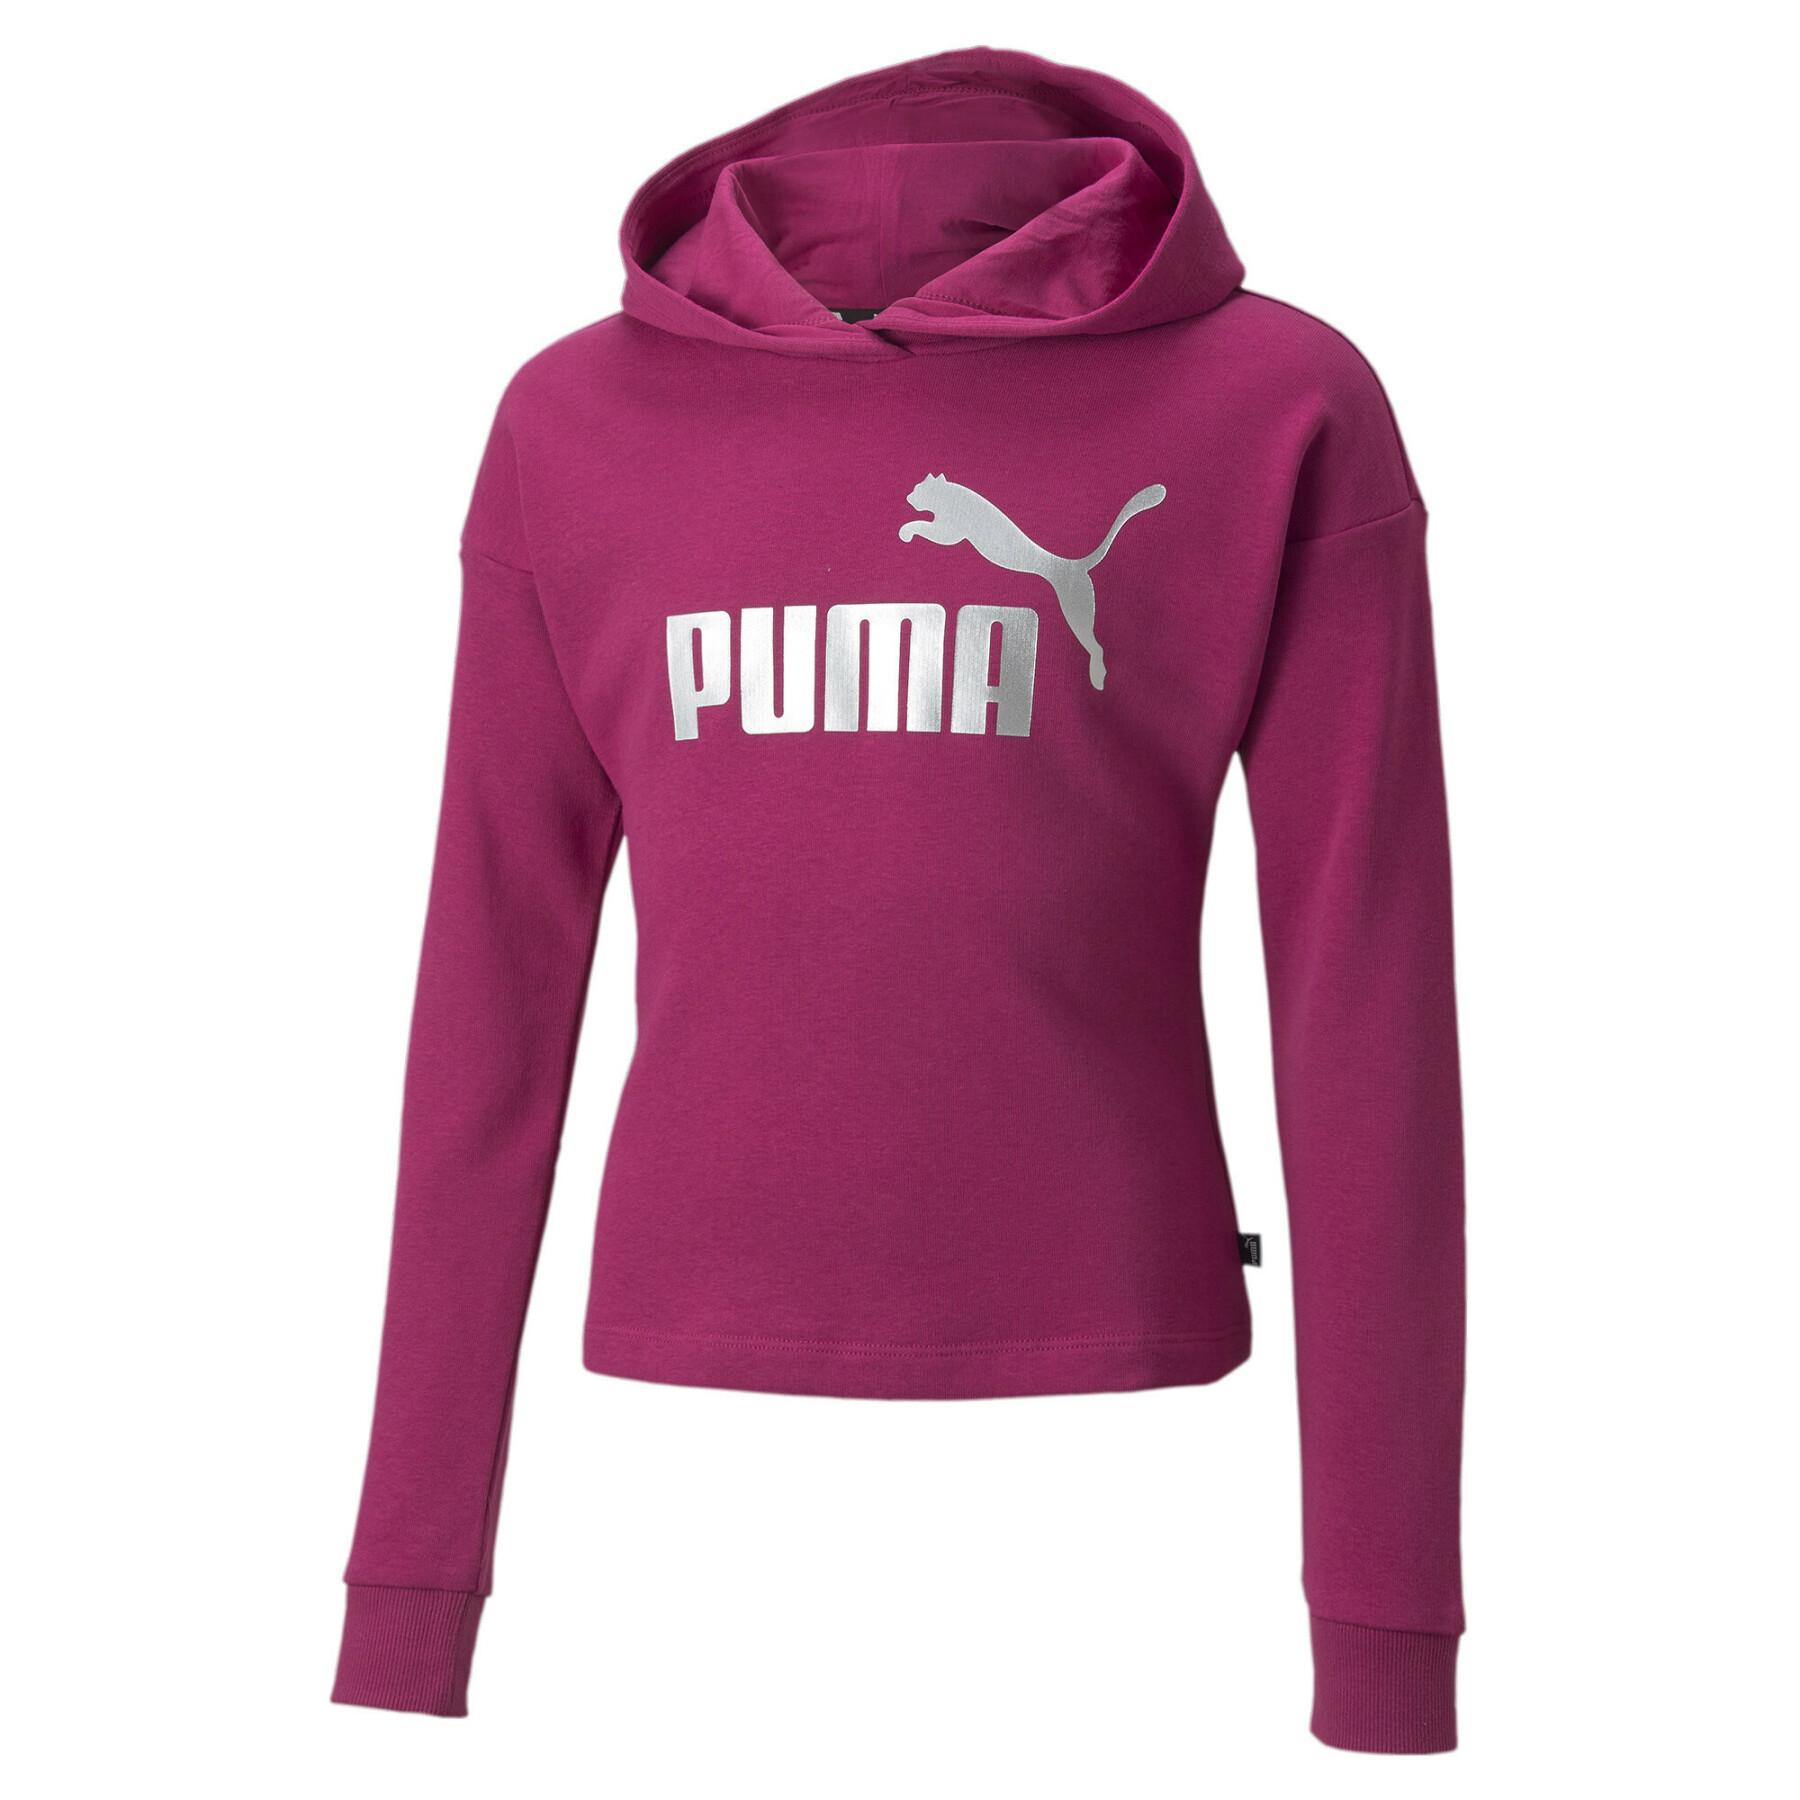 Bluza dziewczęca crop top Puma Essentiel Logo